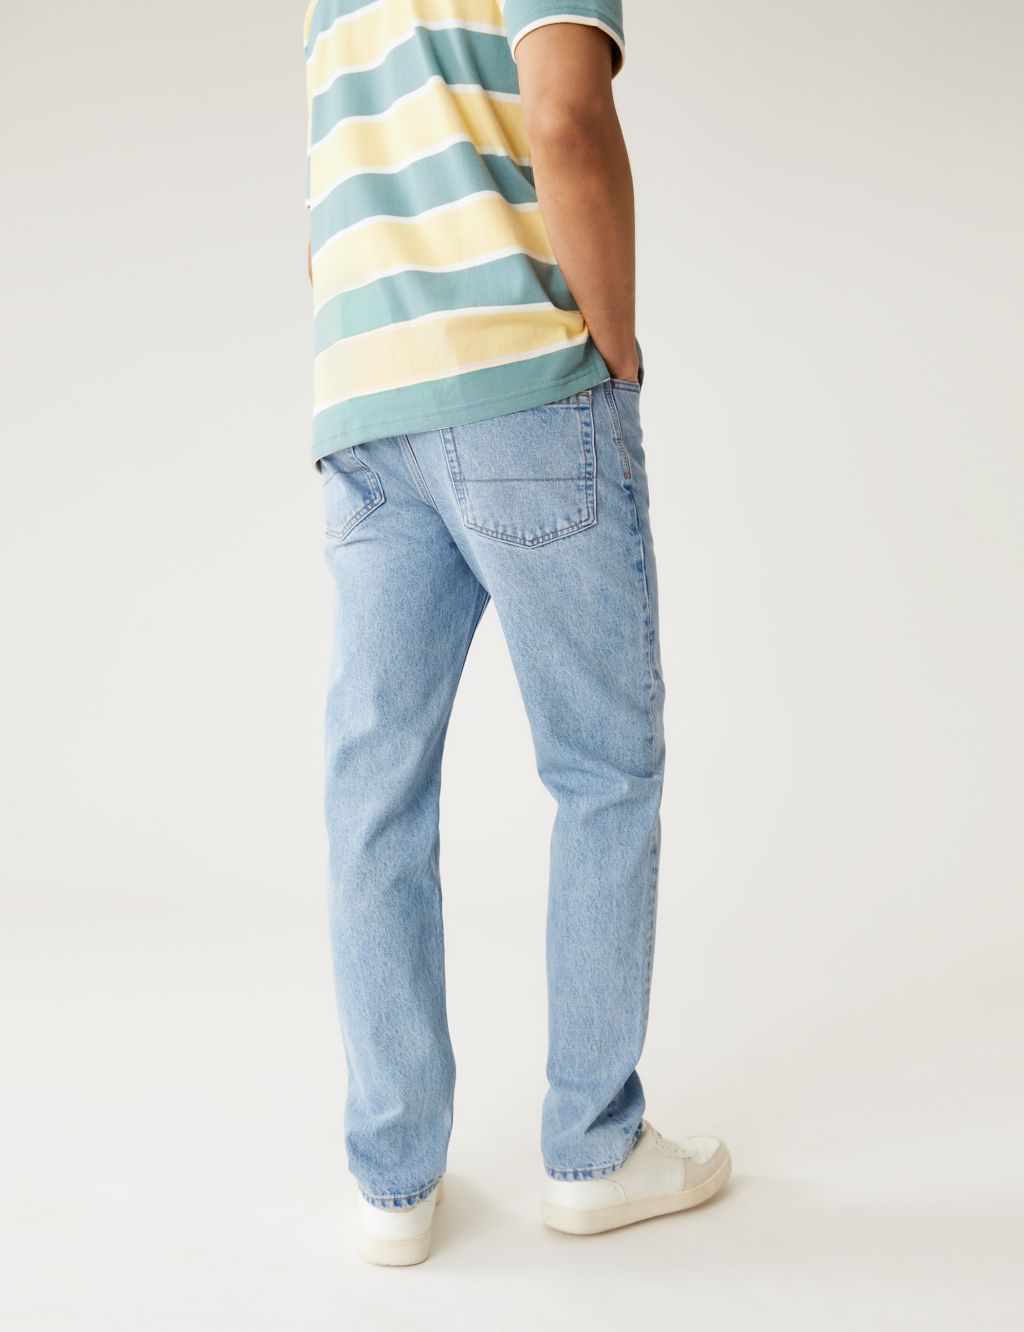 Straight Fit Rigid Vintage Wash Jeans image 3